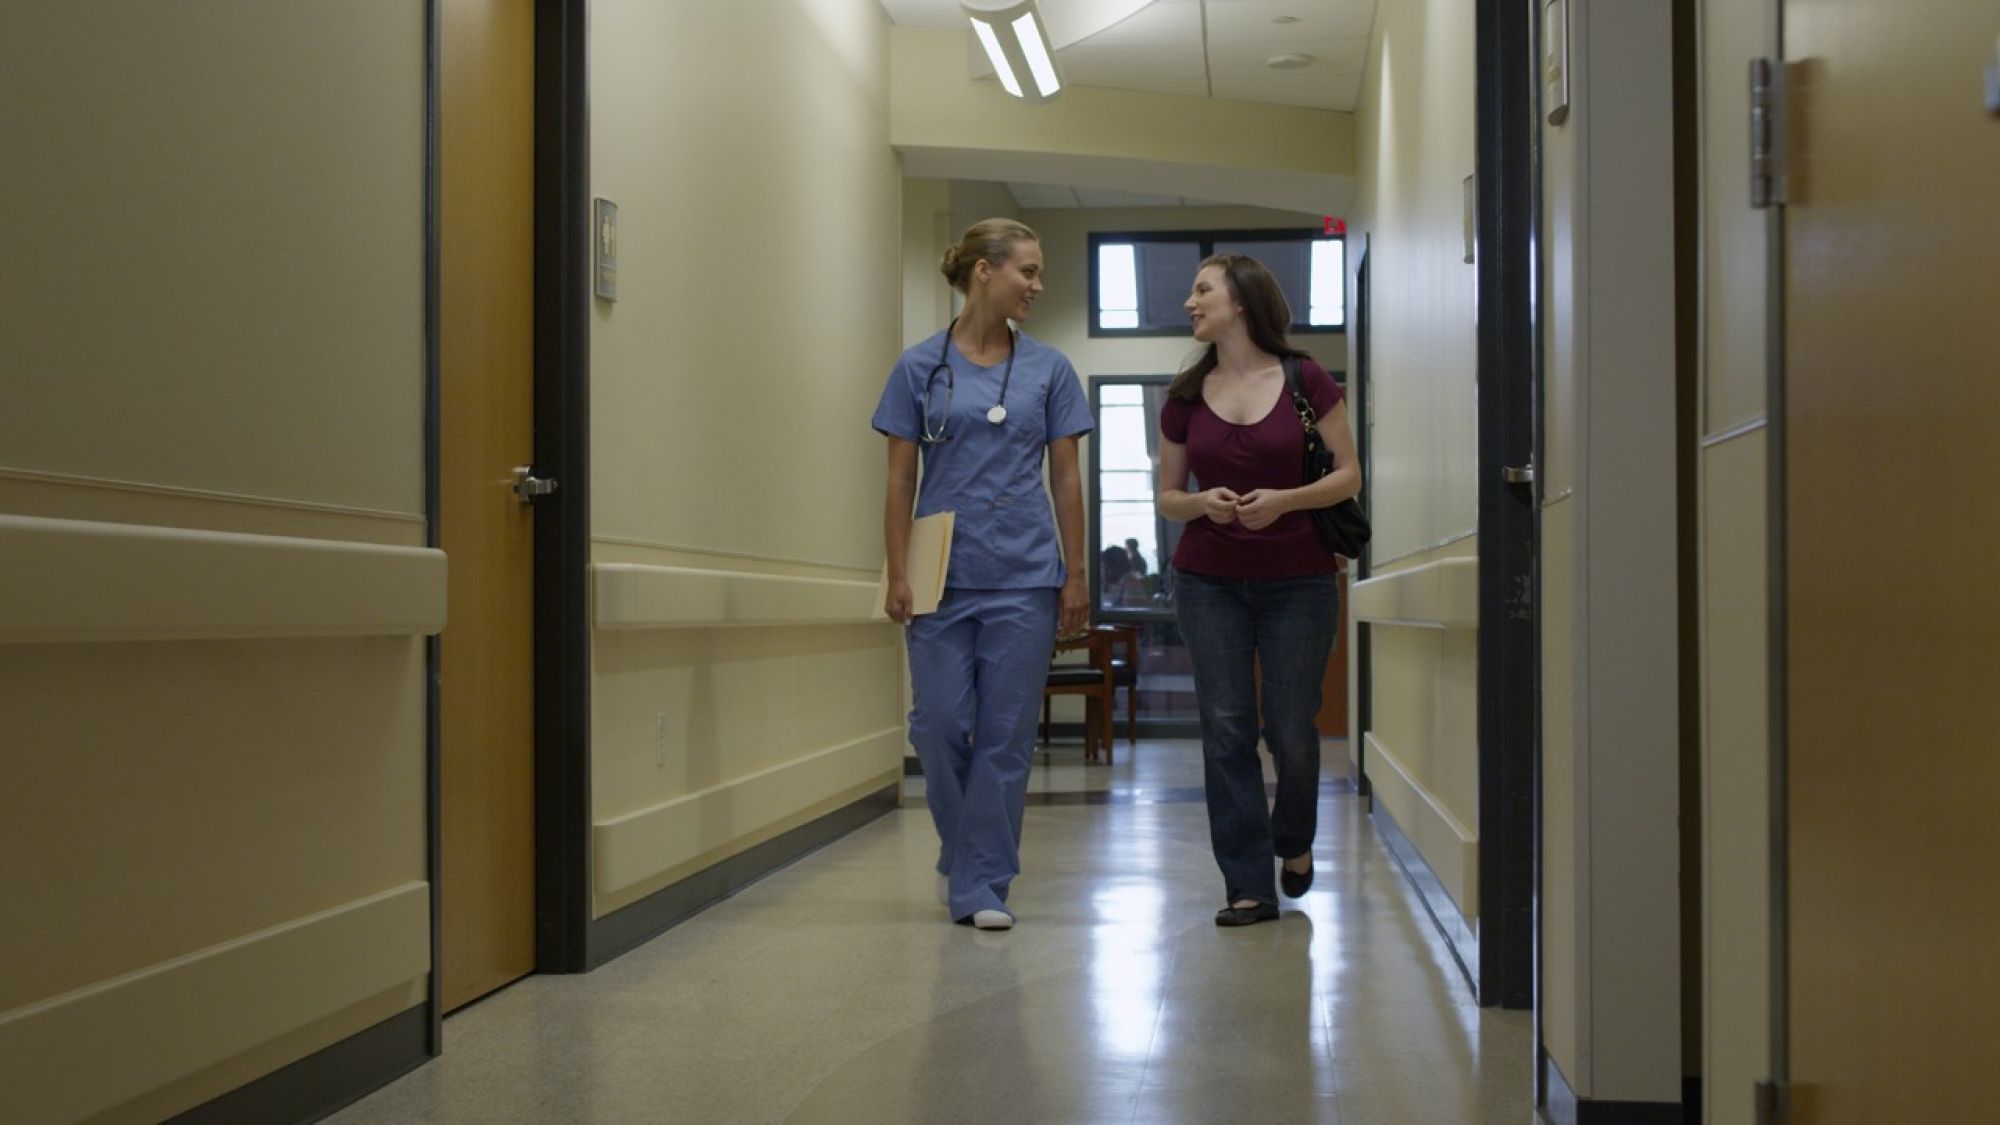 LandingPage-MA_Patient & MA walking down hallway 1